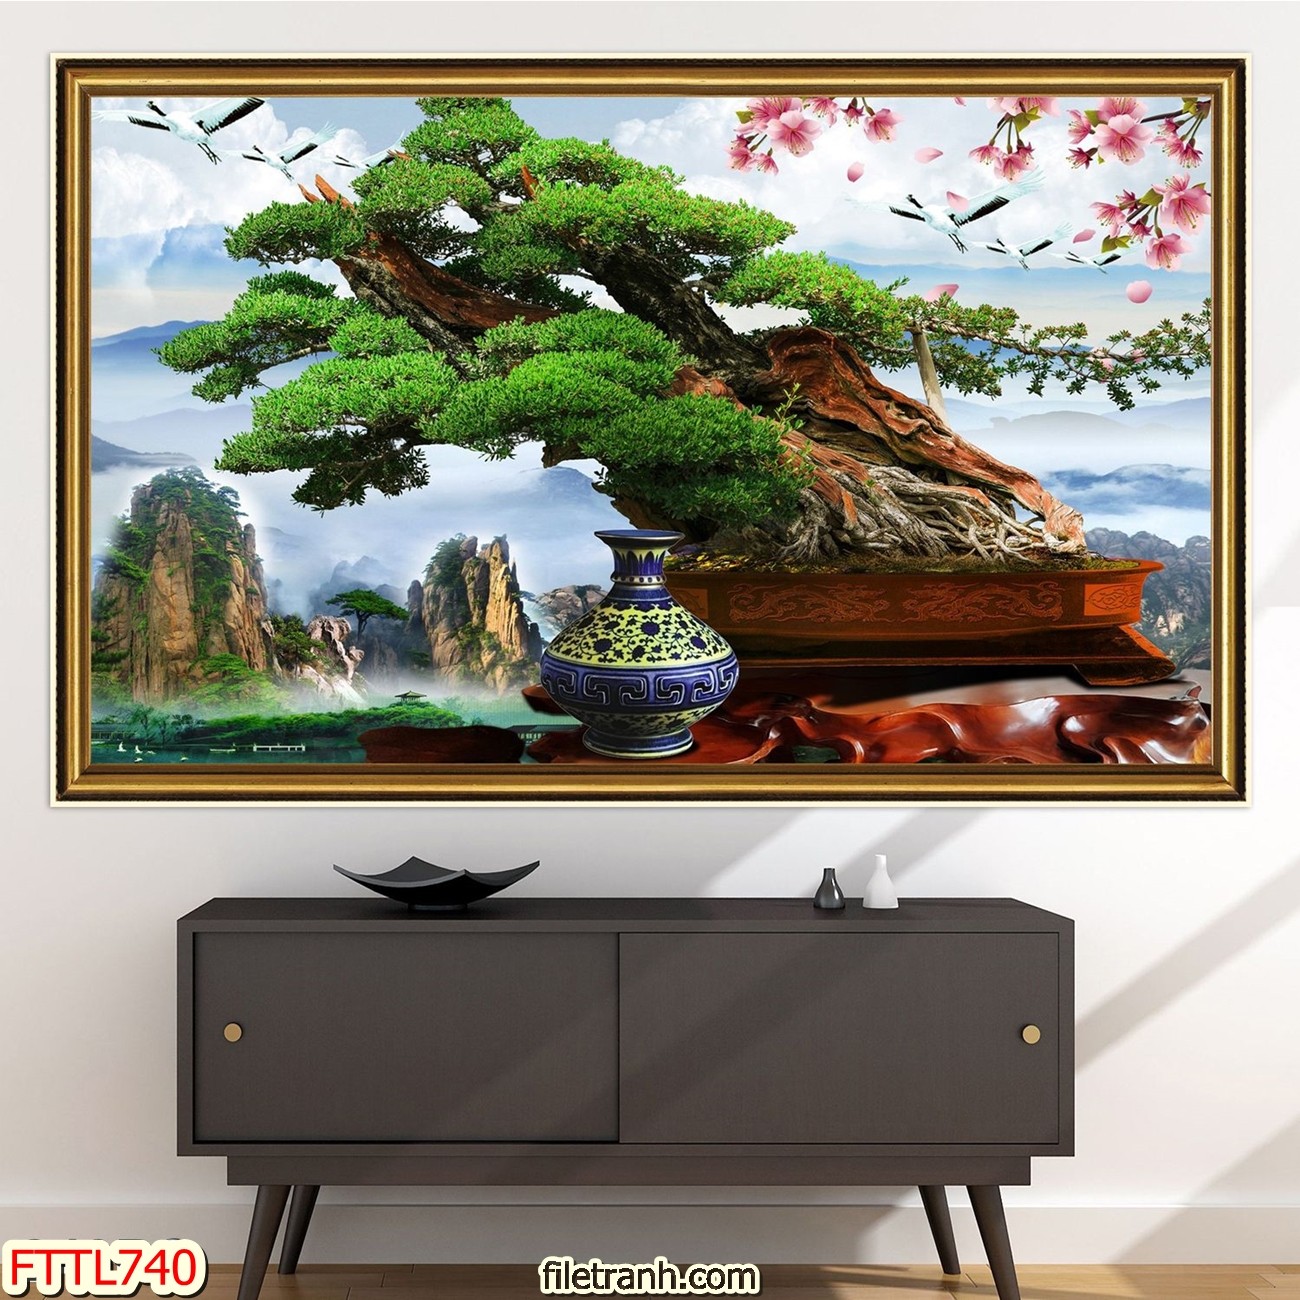 https://filetranh.com/file-tranh-chau-mai-bonsai/file-tranh-chau-mai-bonsai-fttl740.html